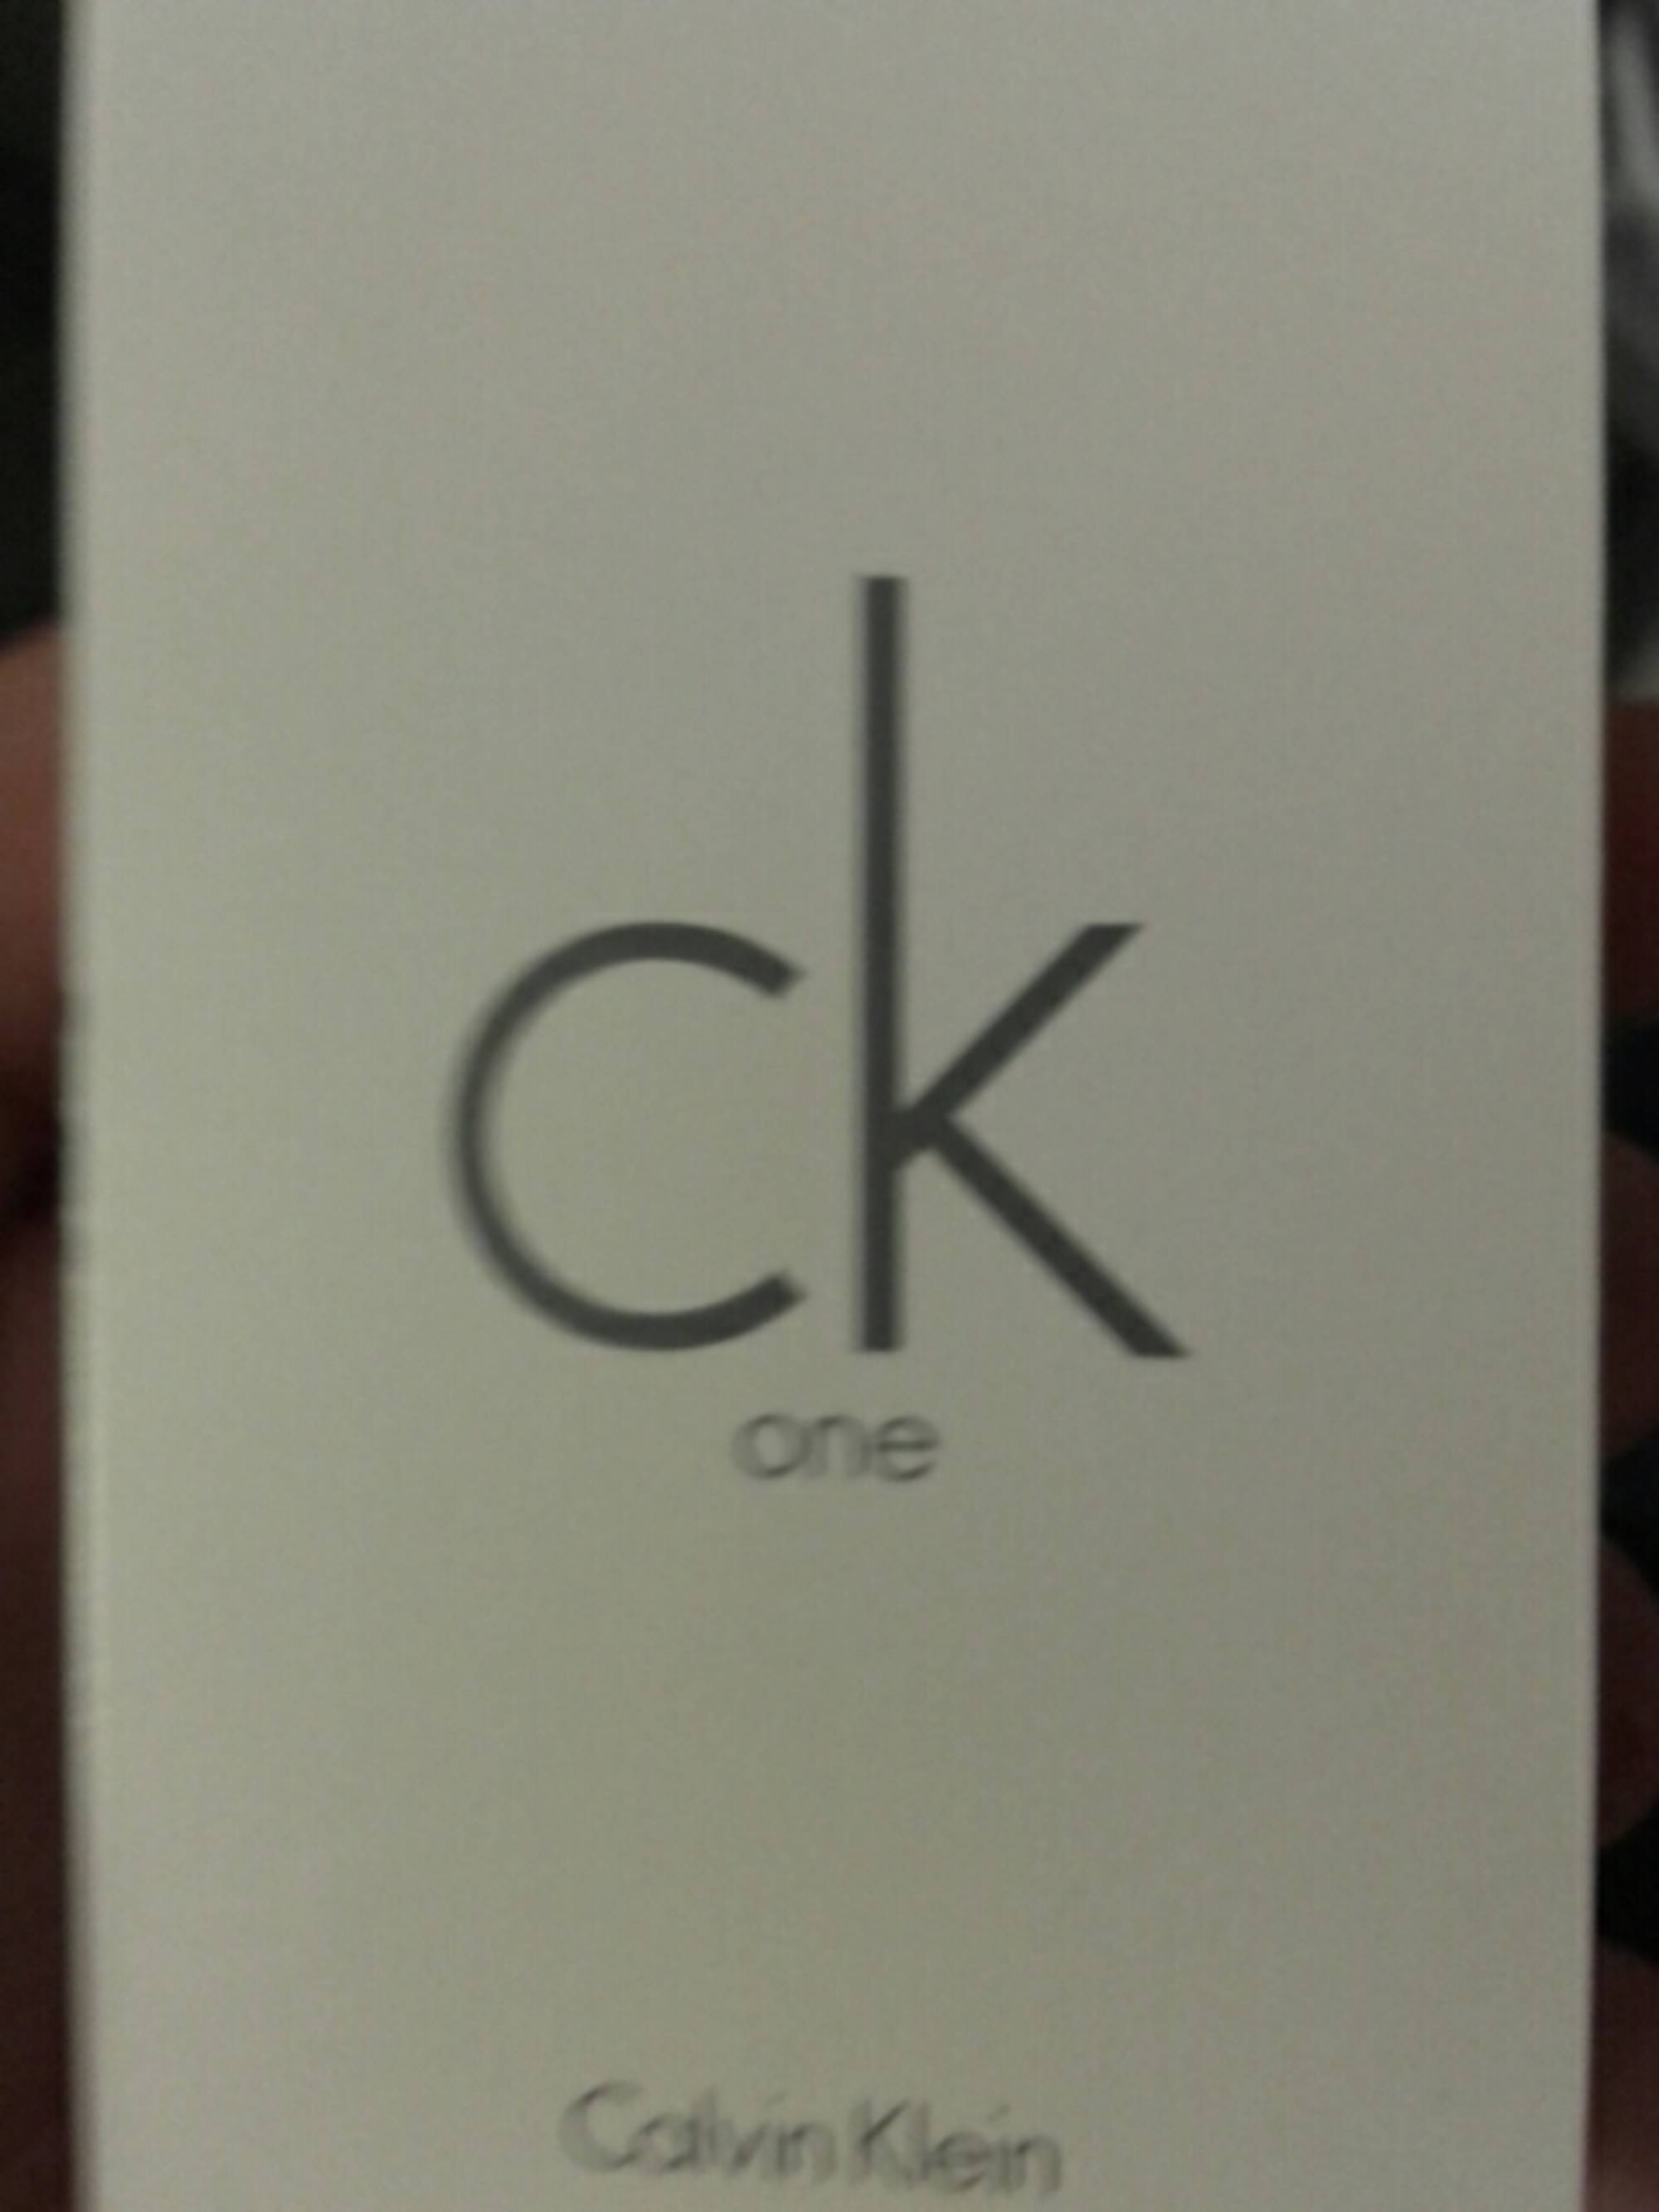 CALVIN KLEIN - Ck one - Eau de parfum